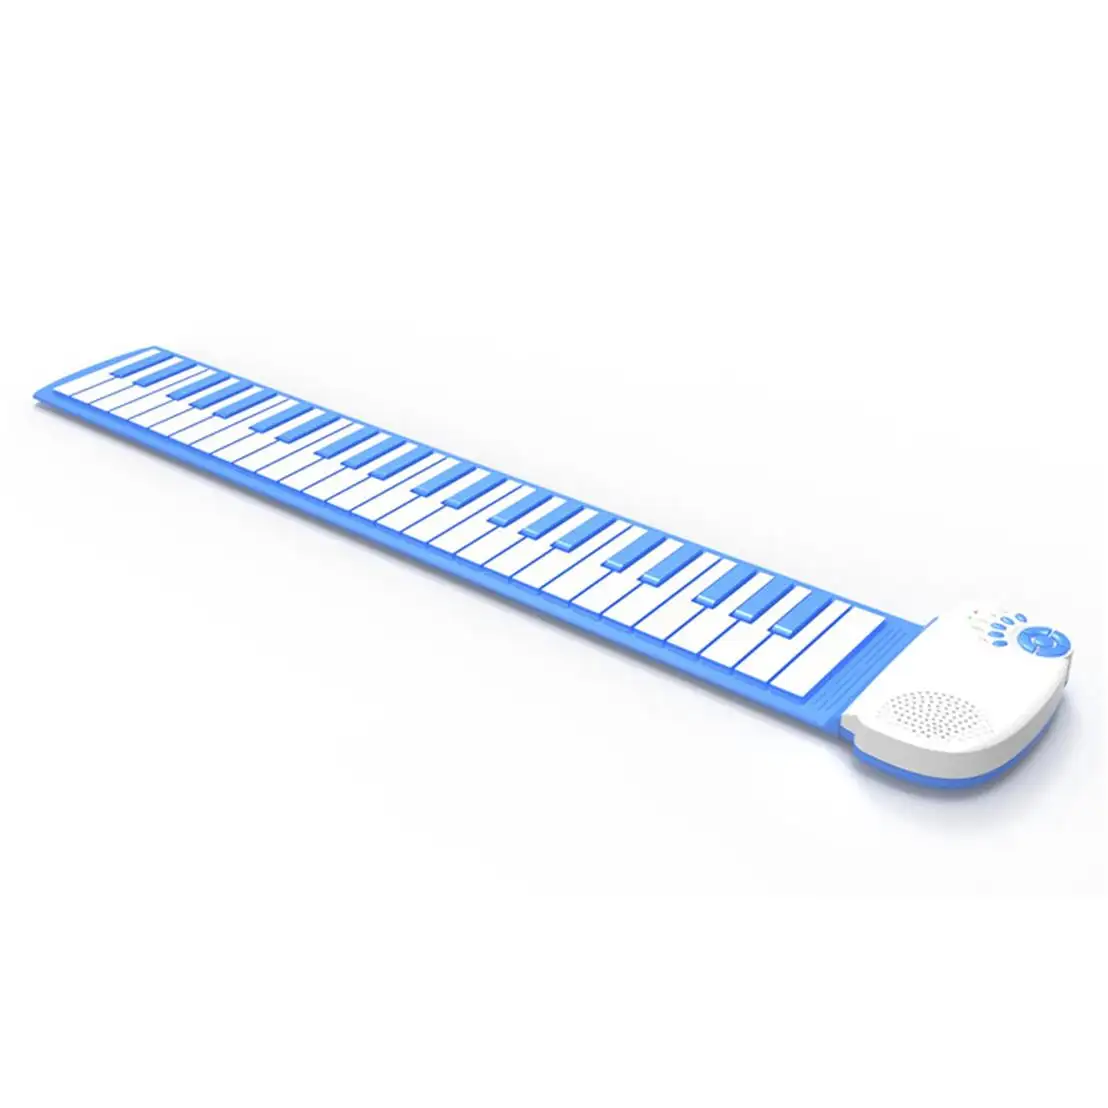 2022 Relatiegeschenk Midi Keyboards Opvouwbare Digitale Roll Up Kawai Piano 88 Toetsen Met Ingebouwde Luidspreker